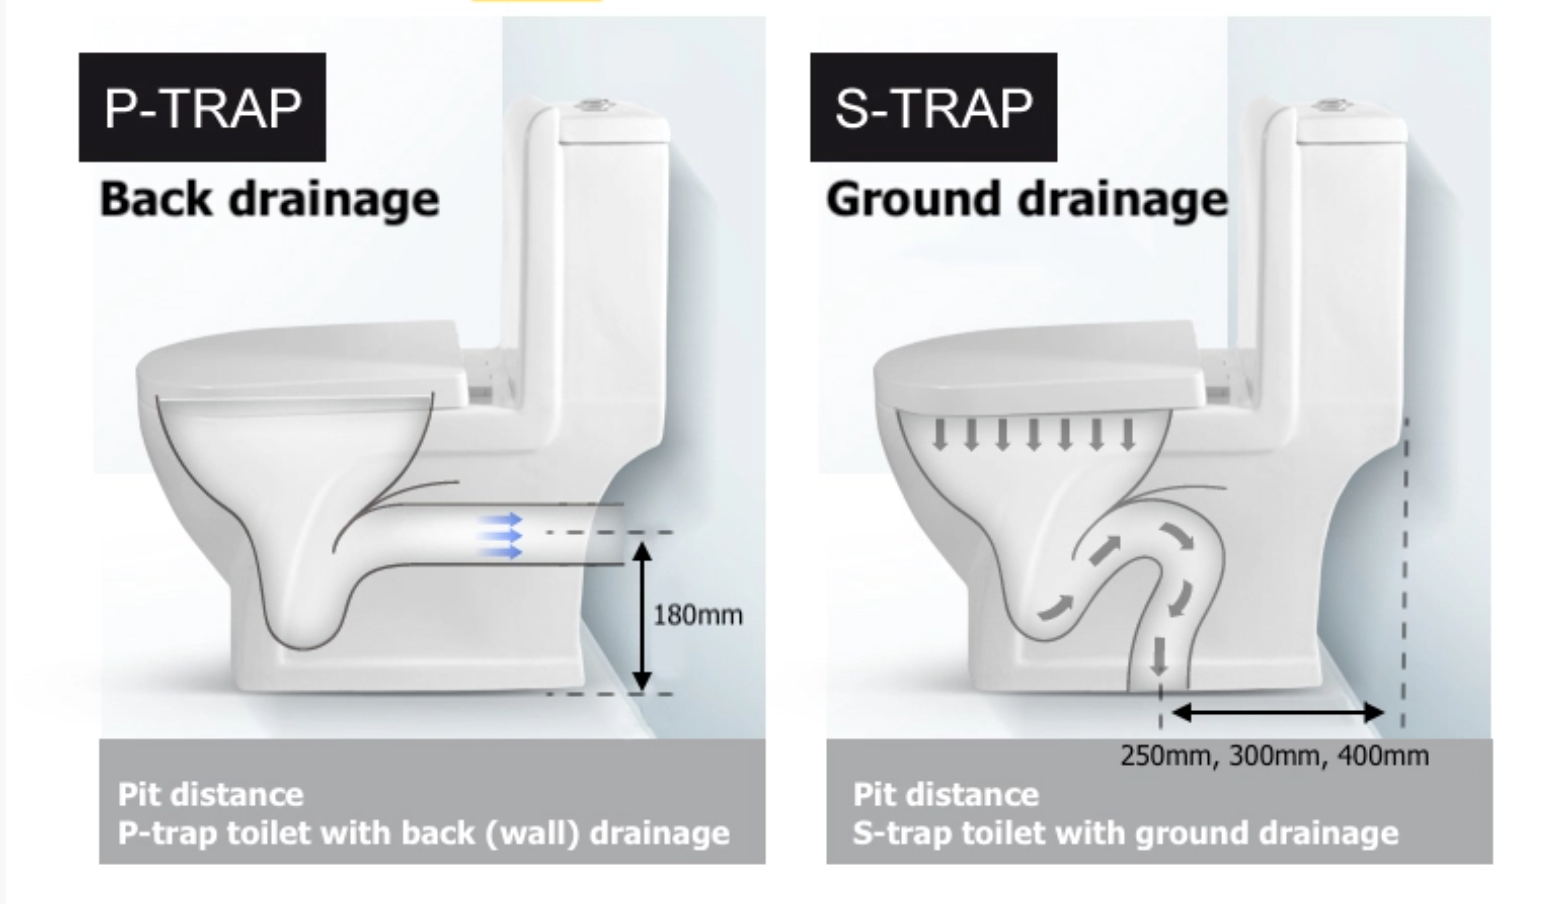 S-trap Install - Simple Drain